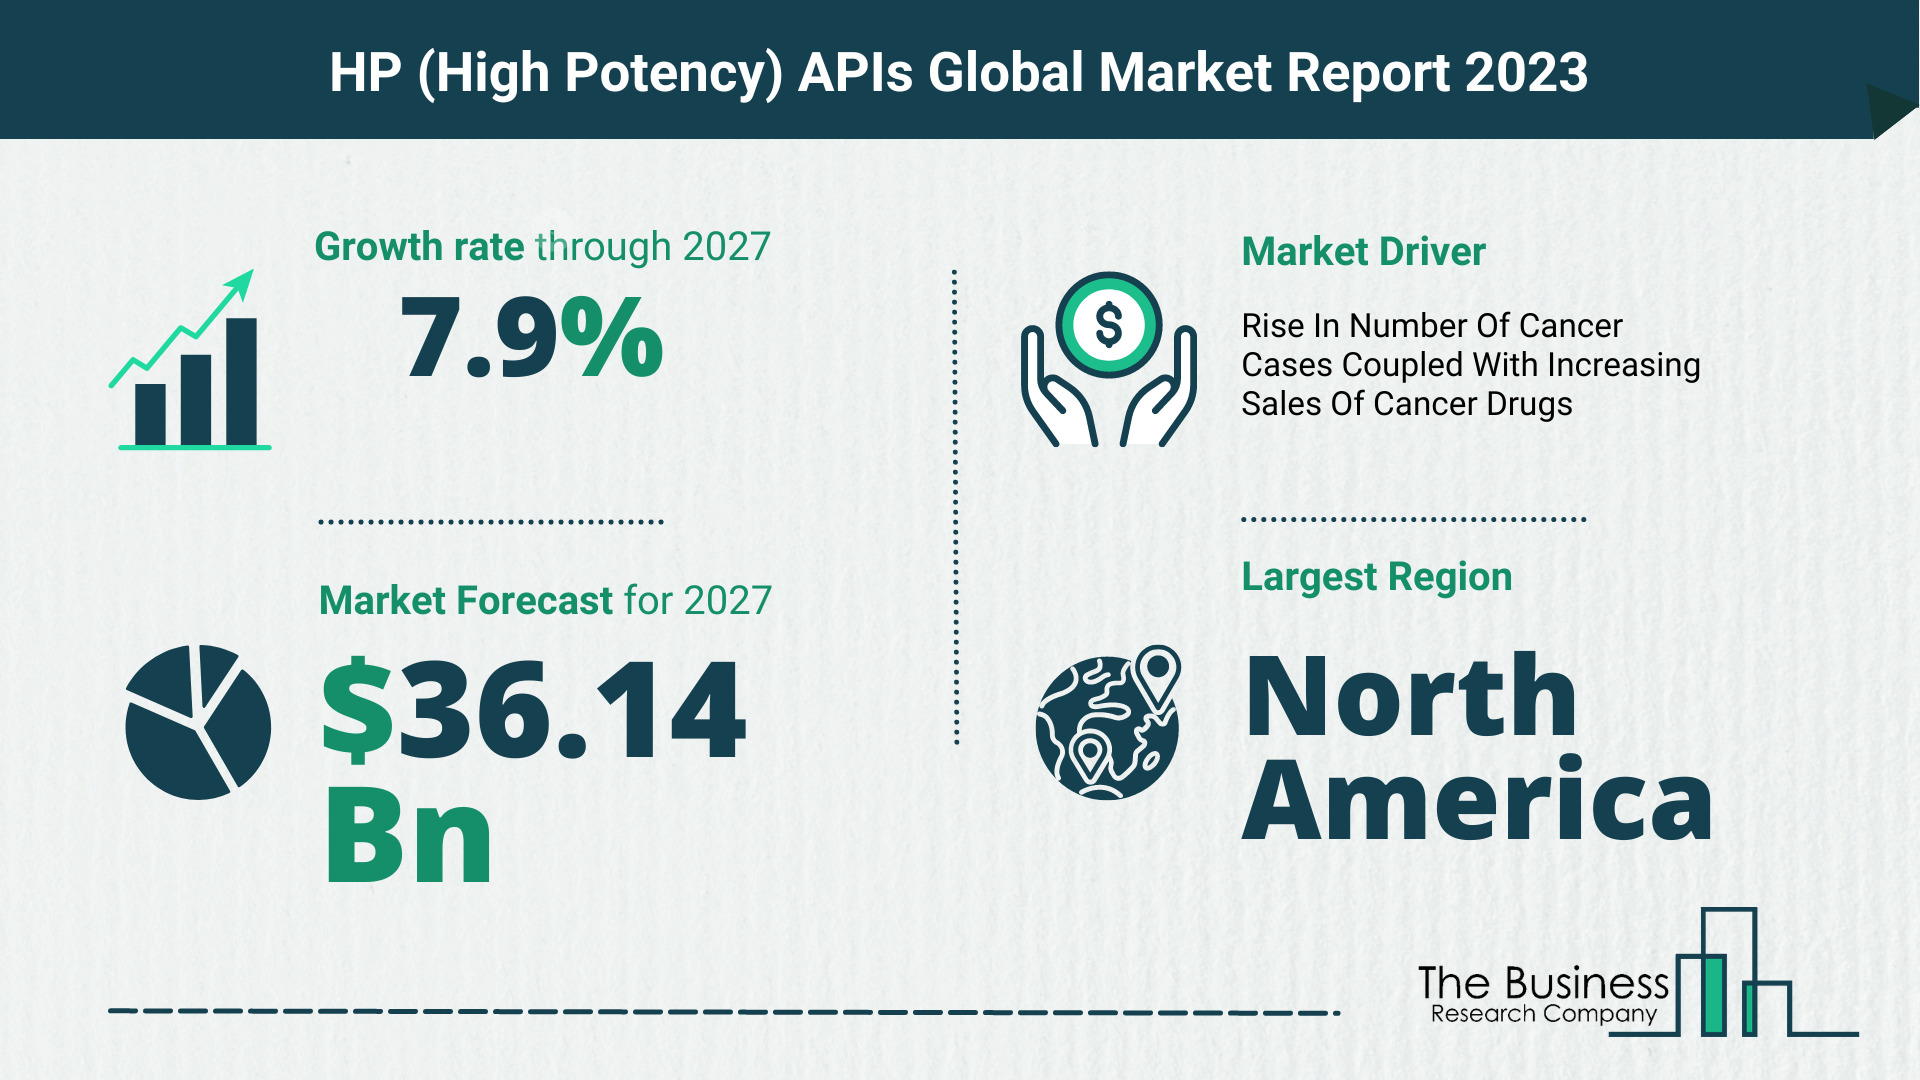 Global HP (High Potency) APIs Market Size